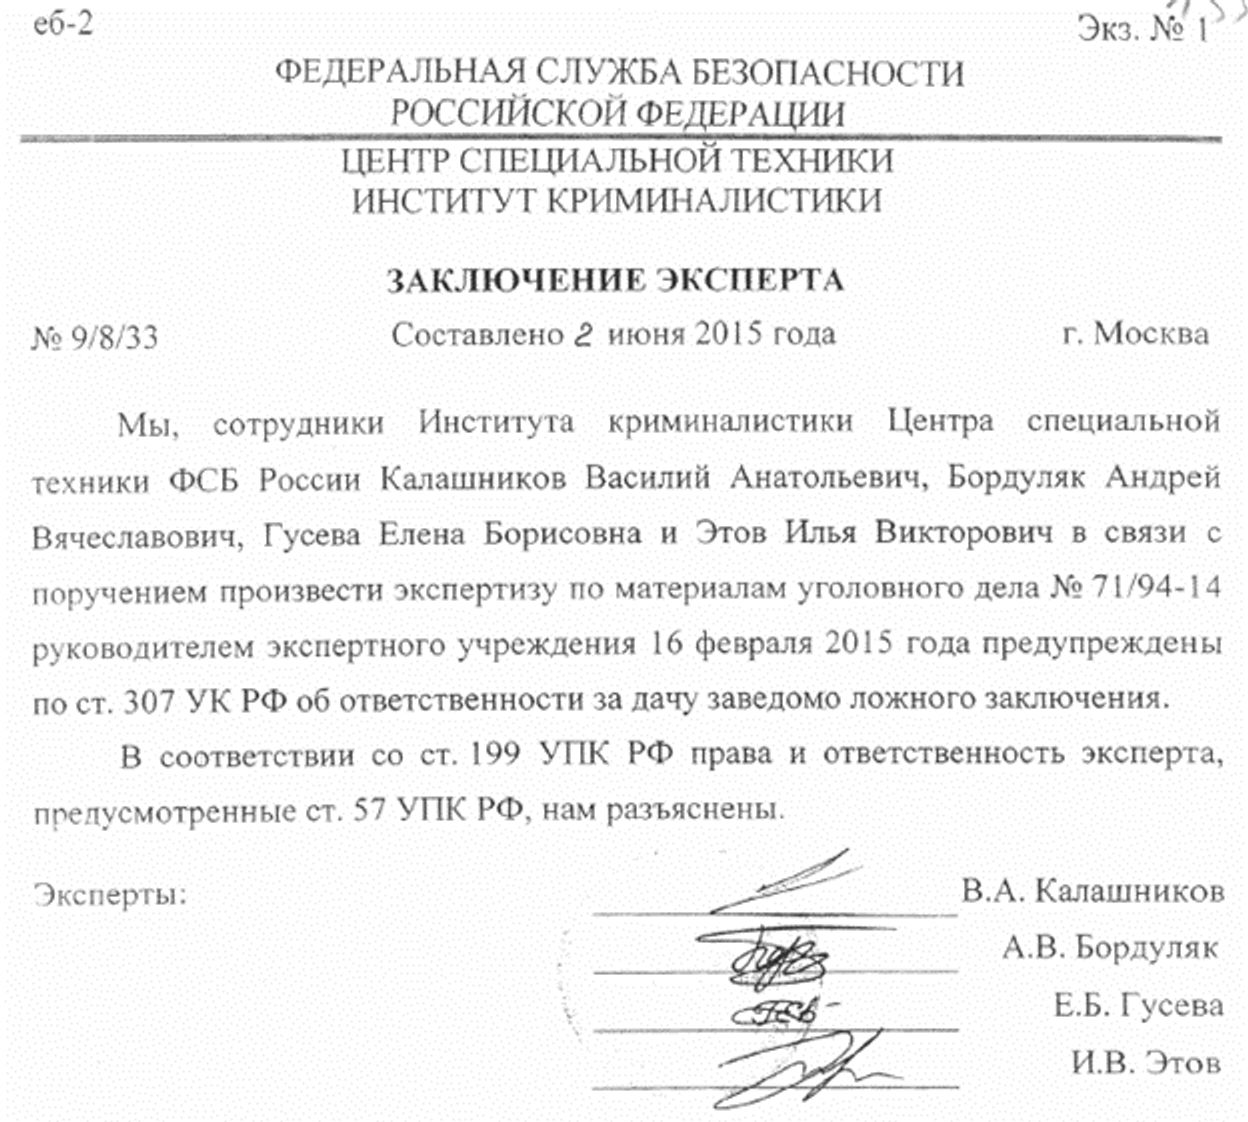 The forensic report saigned by Kalashnikov